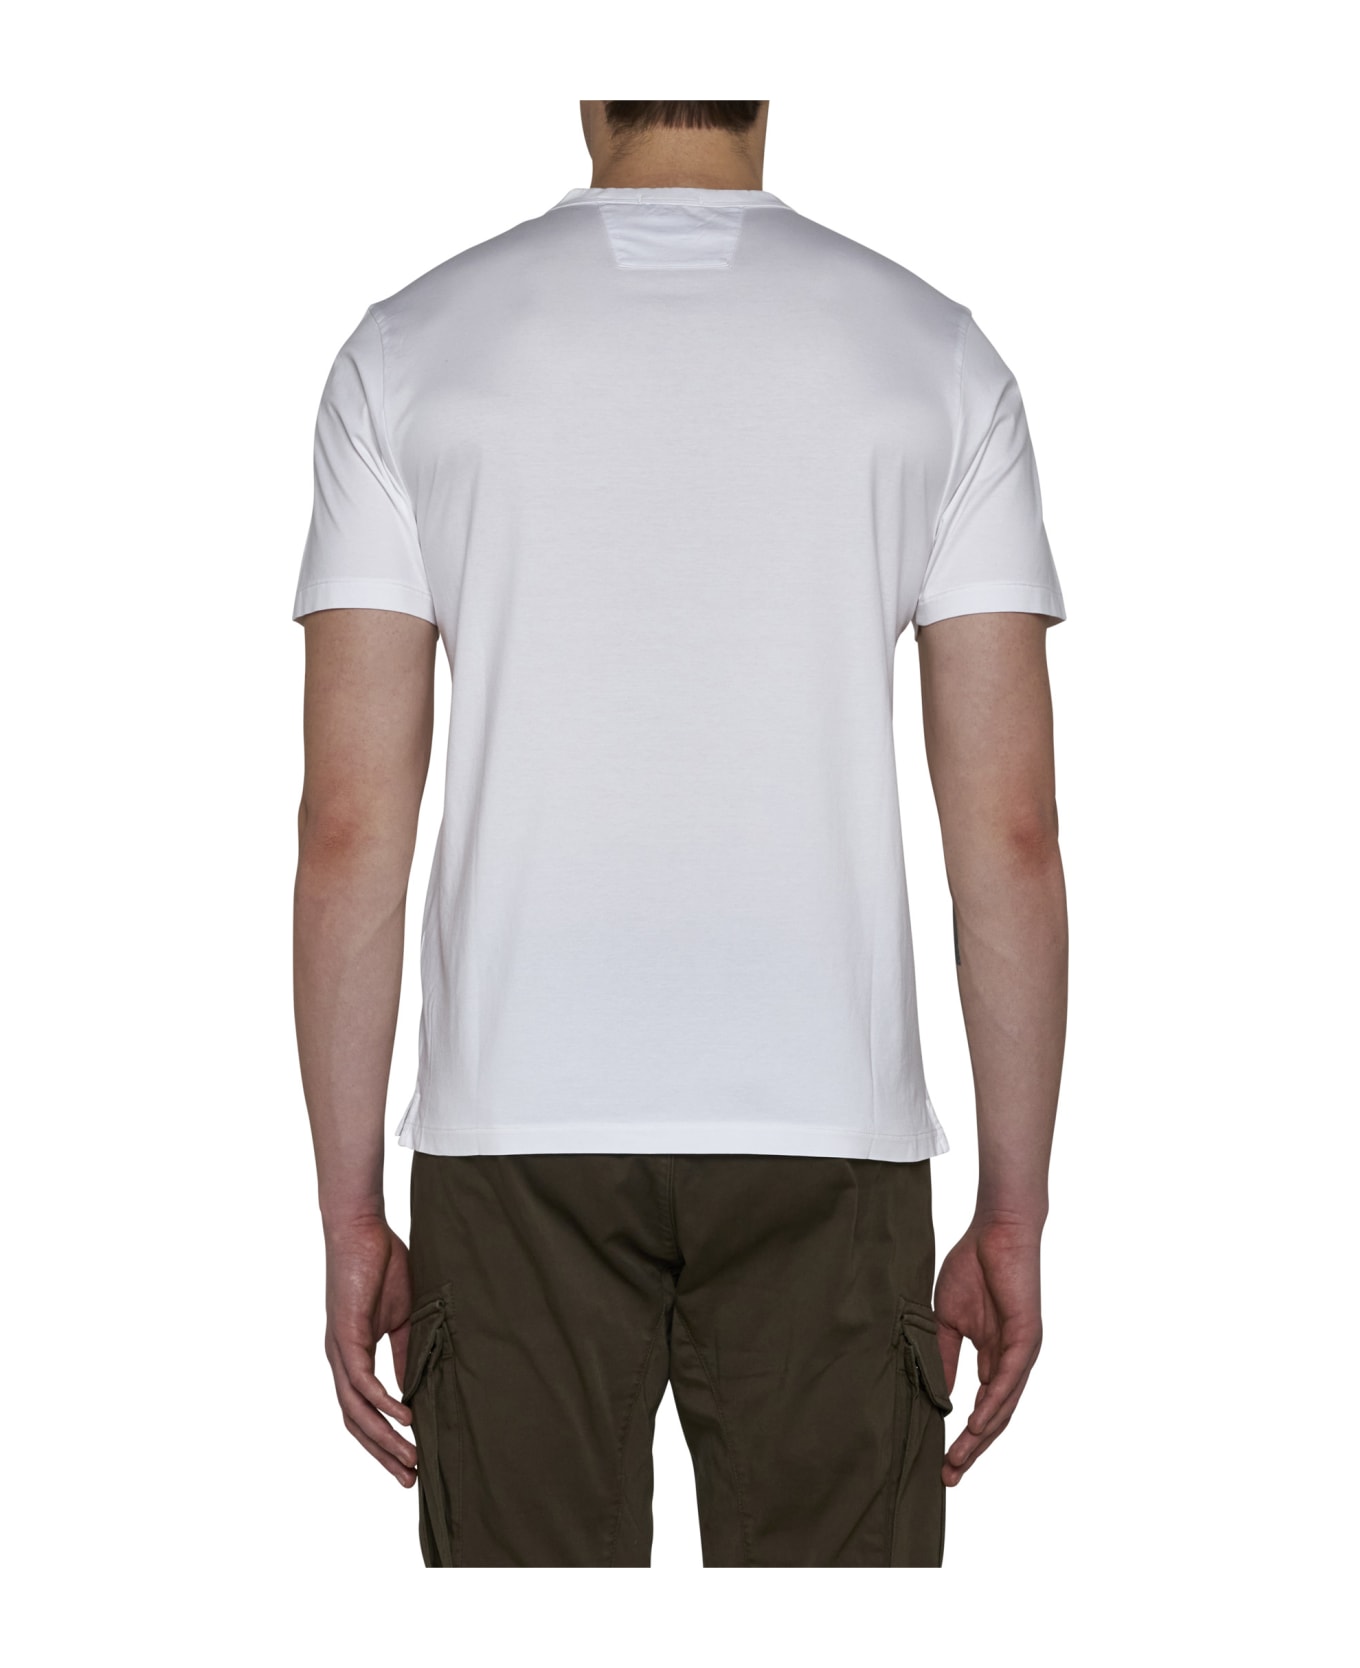 C.P. Company Logo And Pockets Cotton T-shirt - White